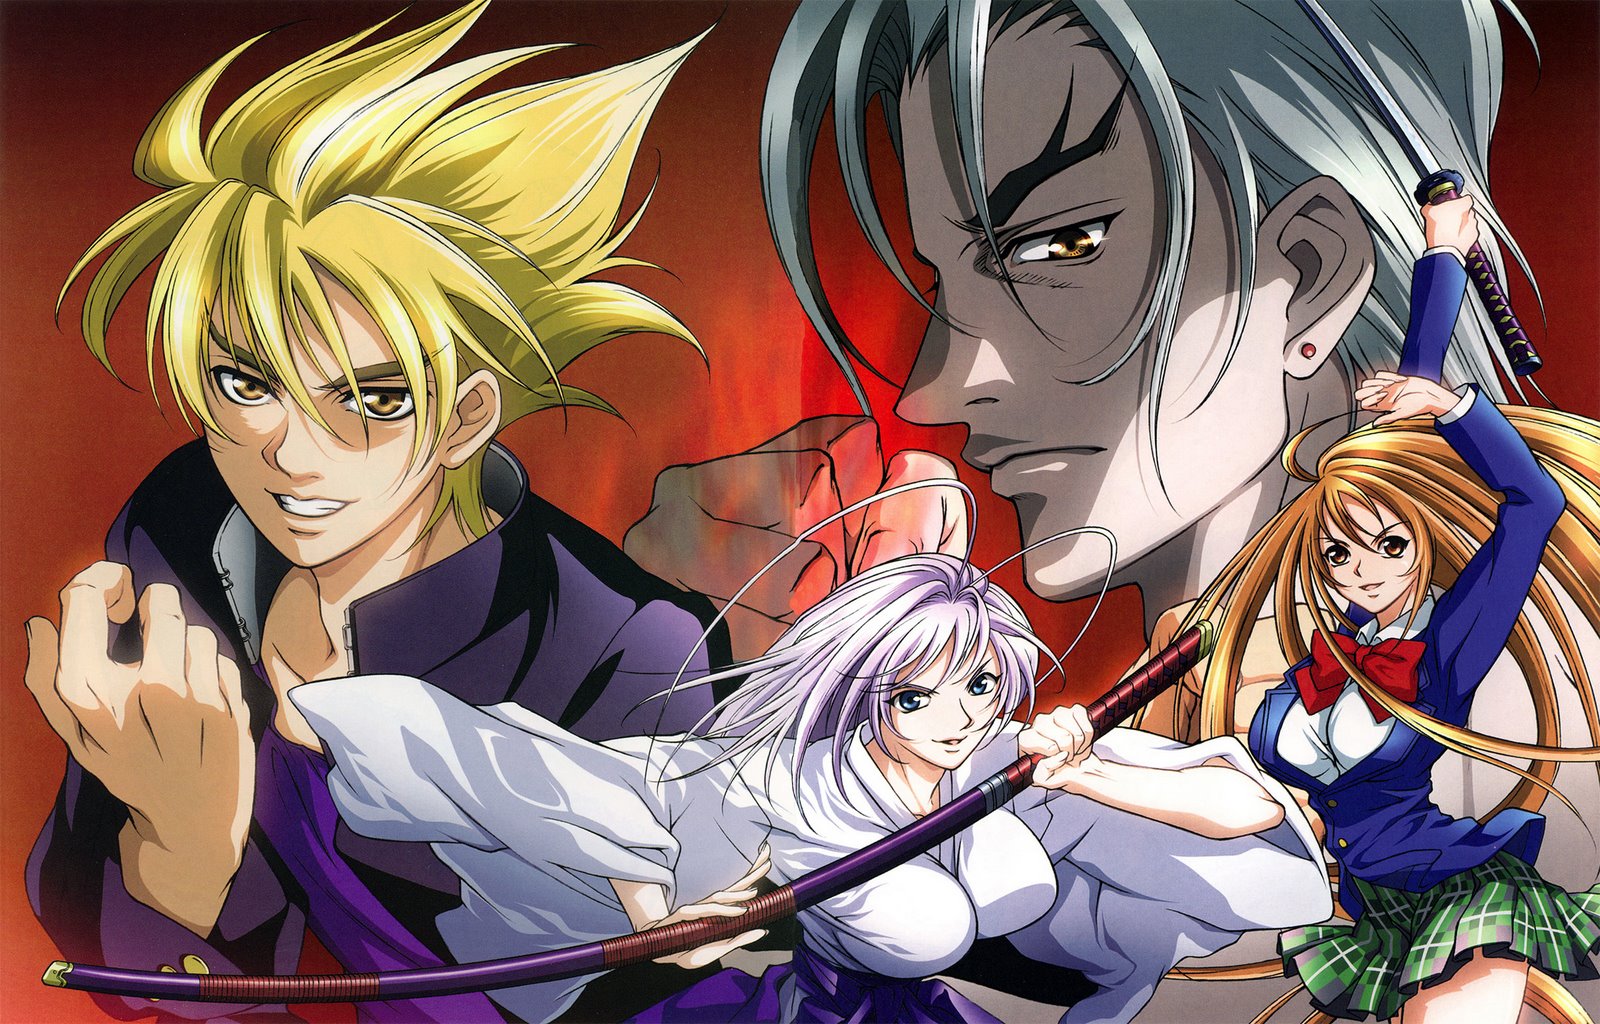 Tenjho Tenge a Nostalgic Review – All About Anime and Manga